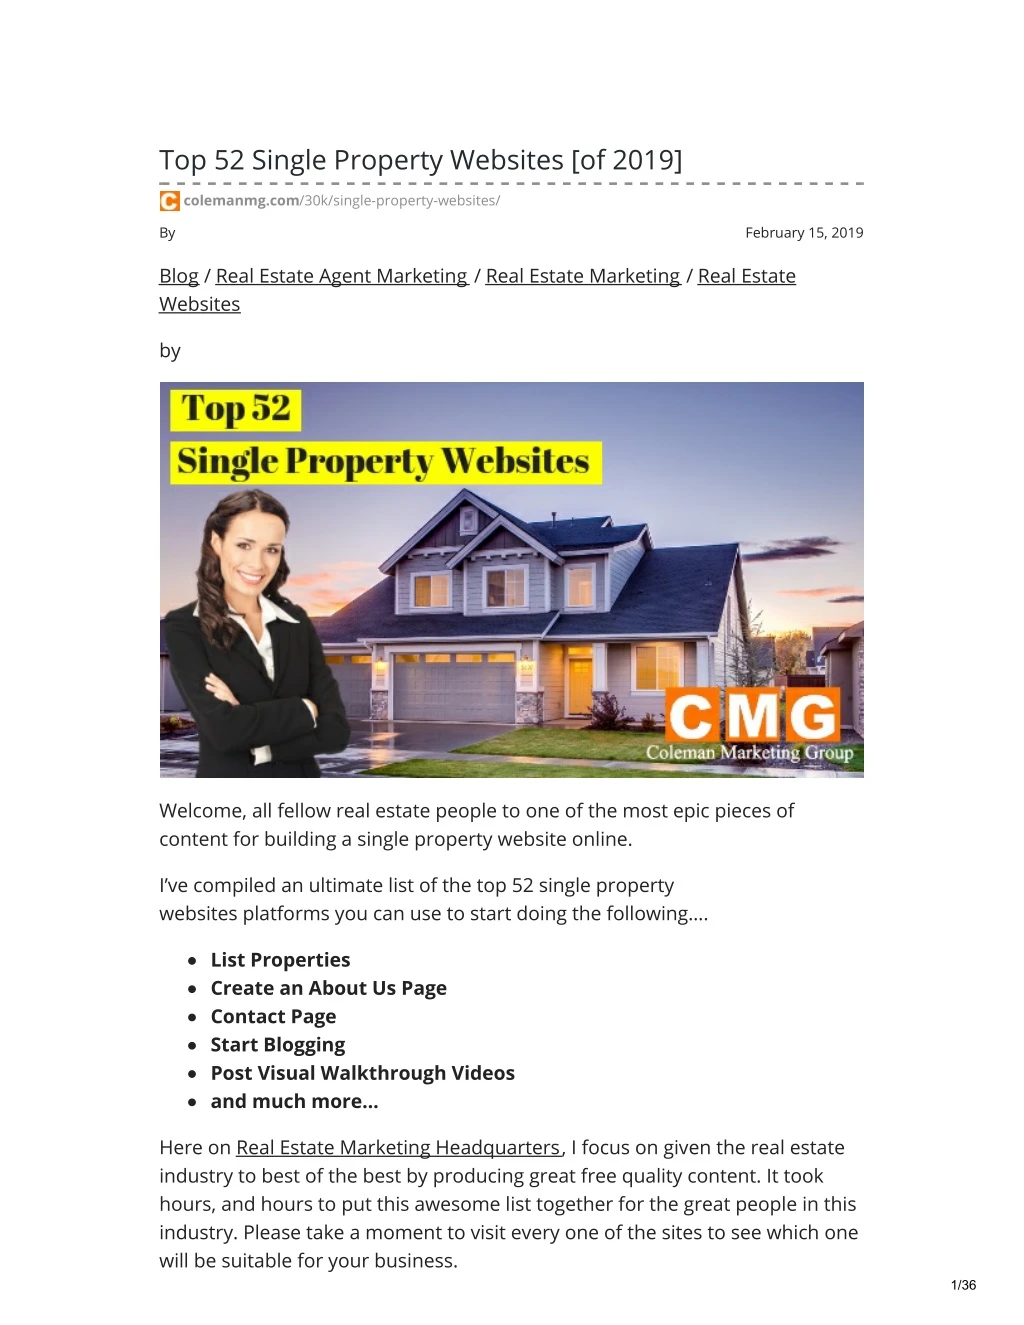 top 52 single property websites of 2019